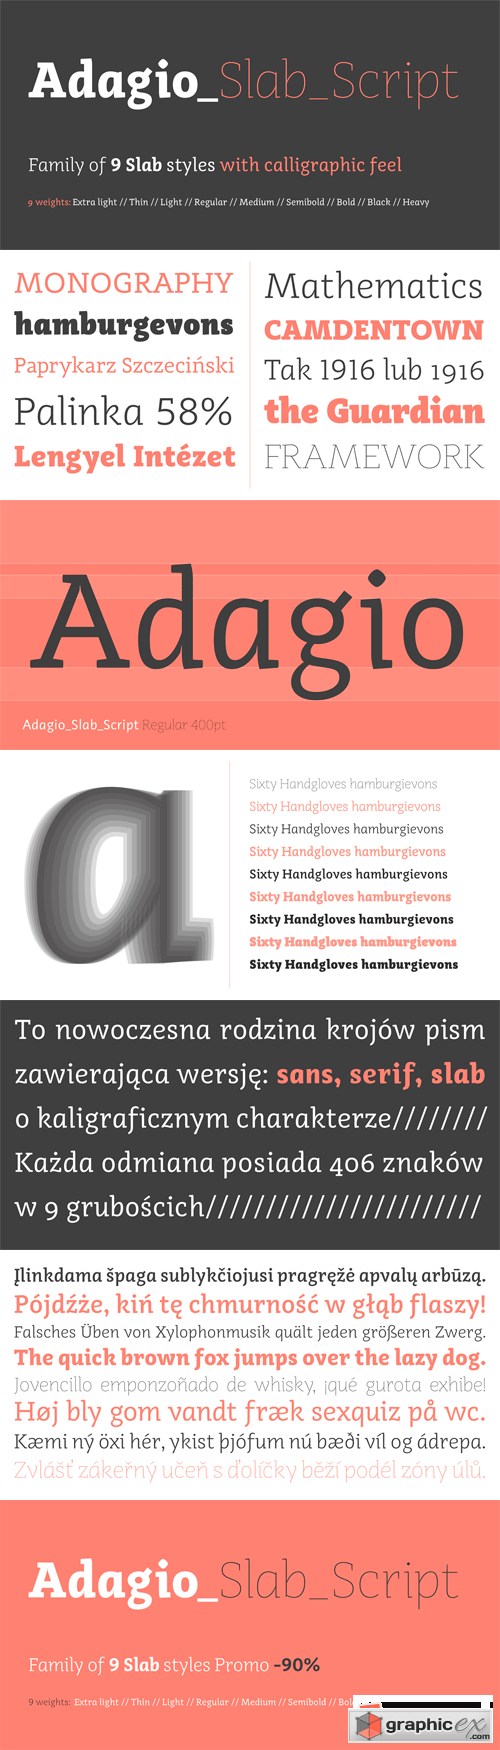 Adagio Slab Script Font Family - 9 Fonts for $140